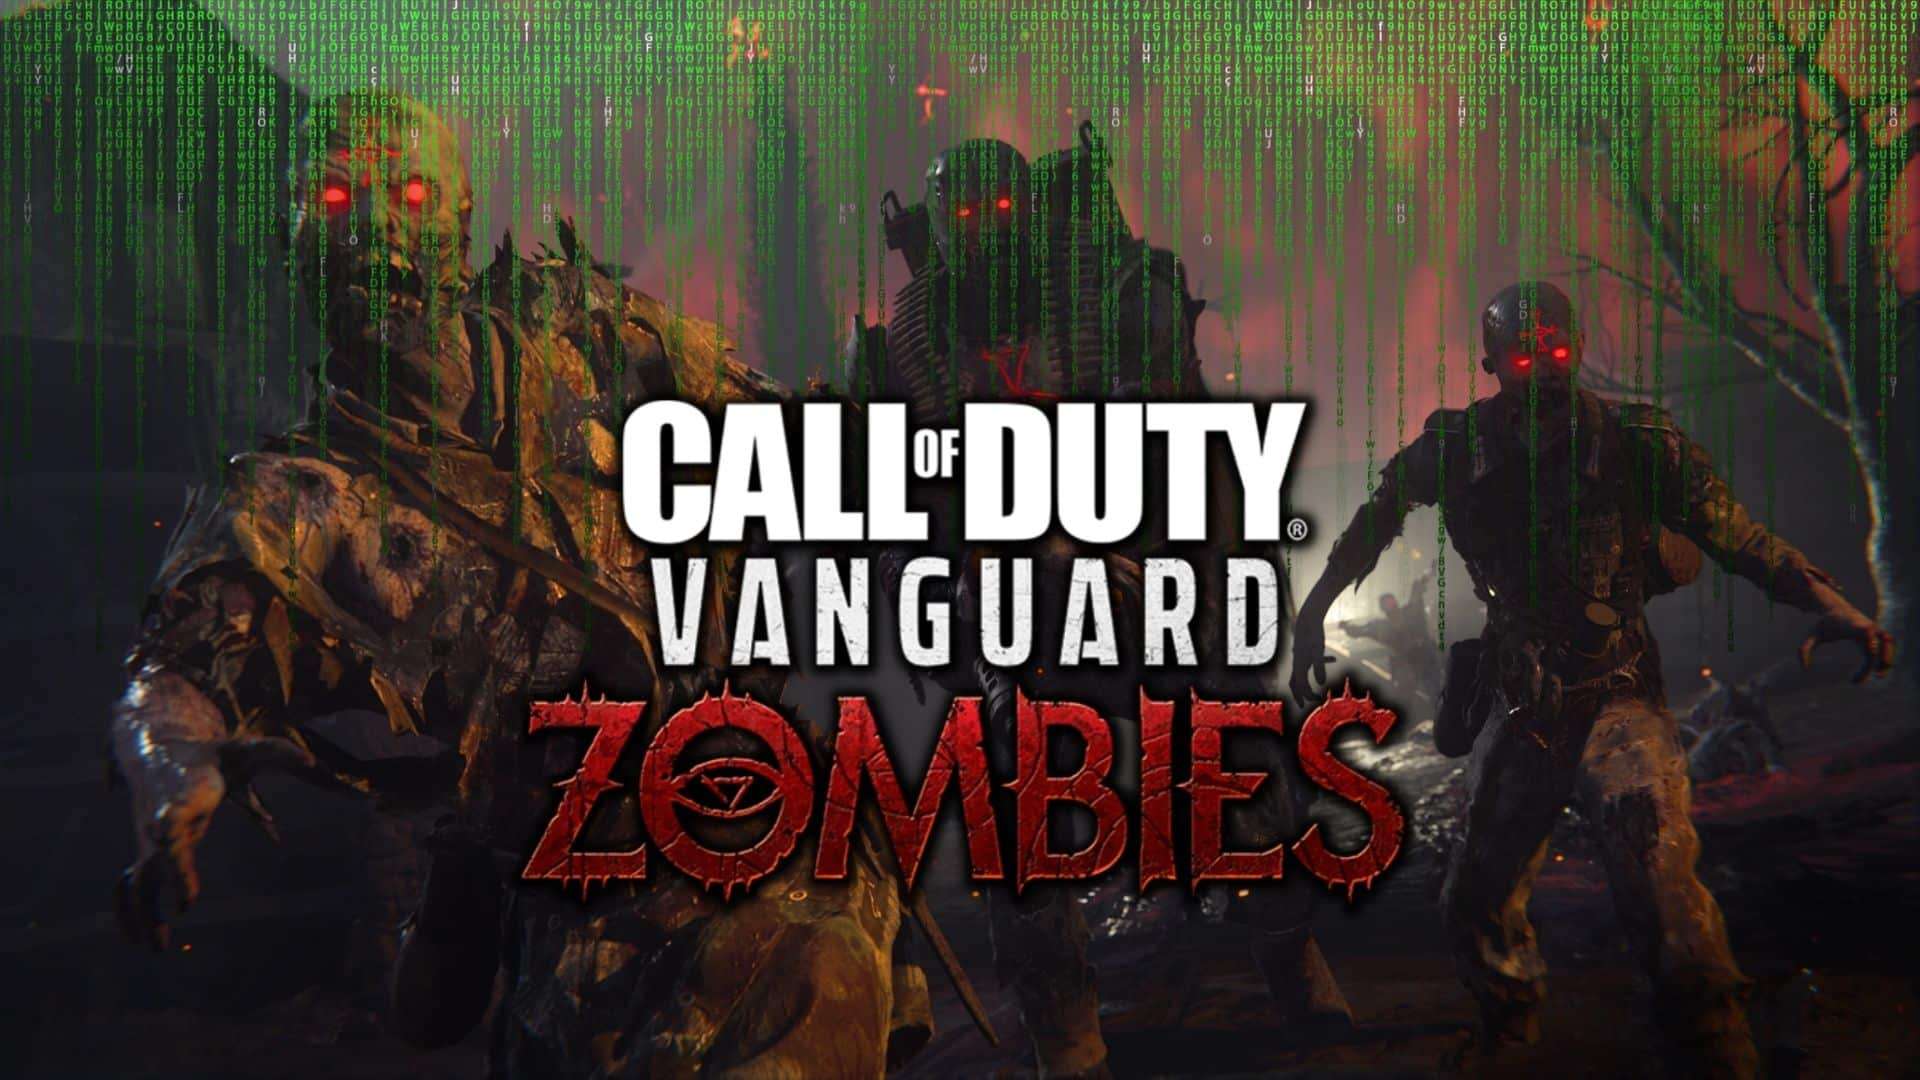 vanguard zombies looking menacing